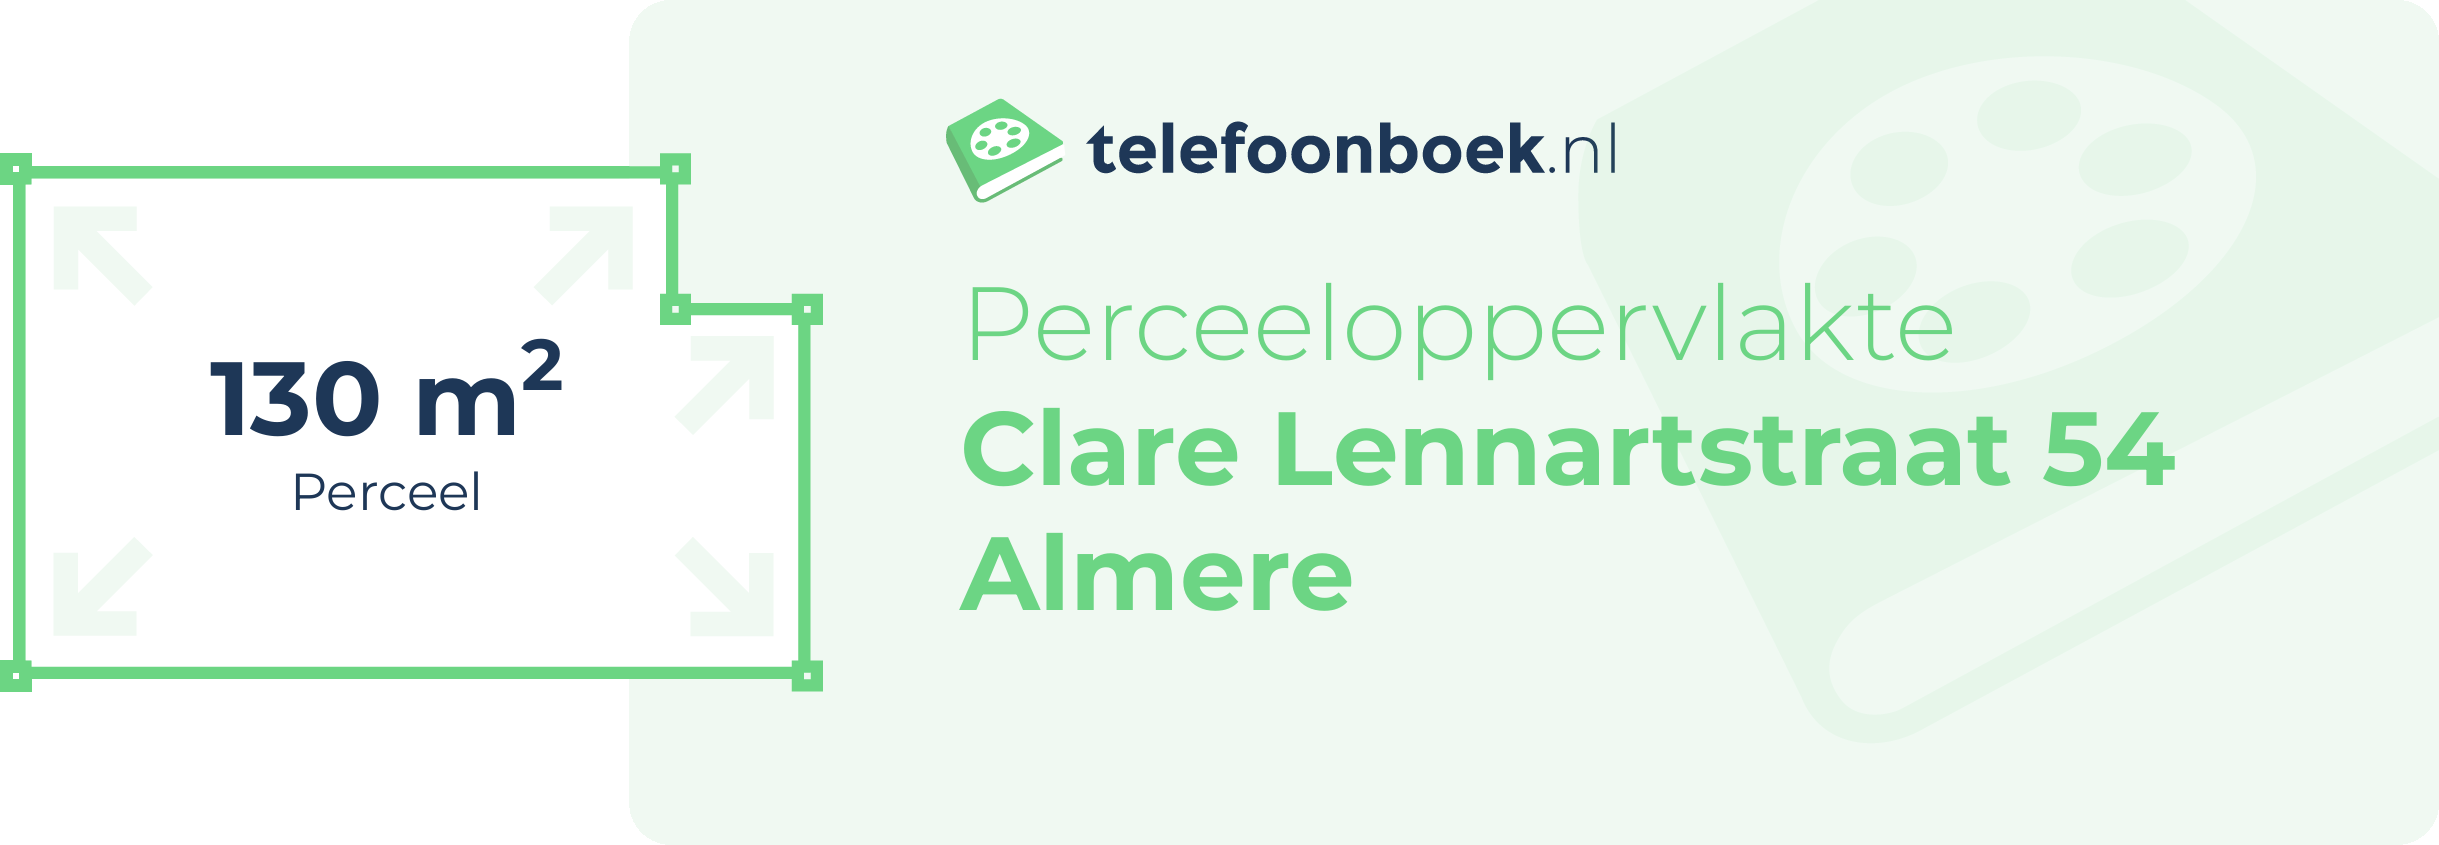 Perceeloppervlakte Clare Lennartstraat 54 Almere